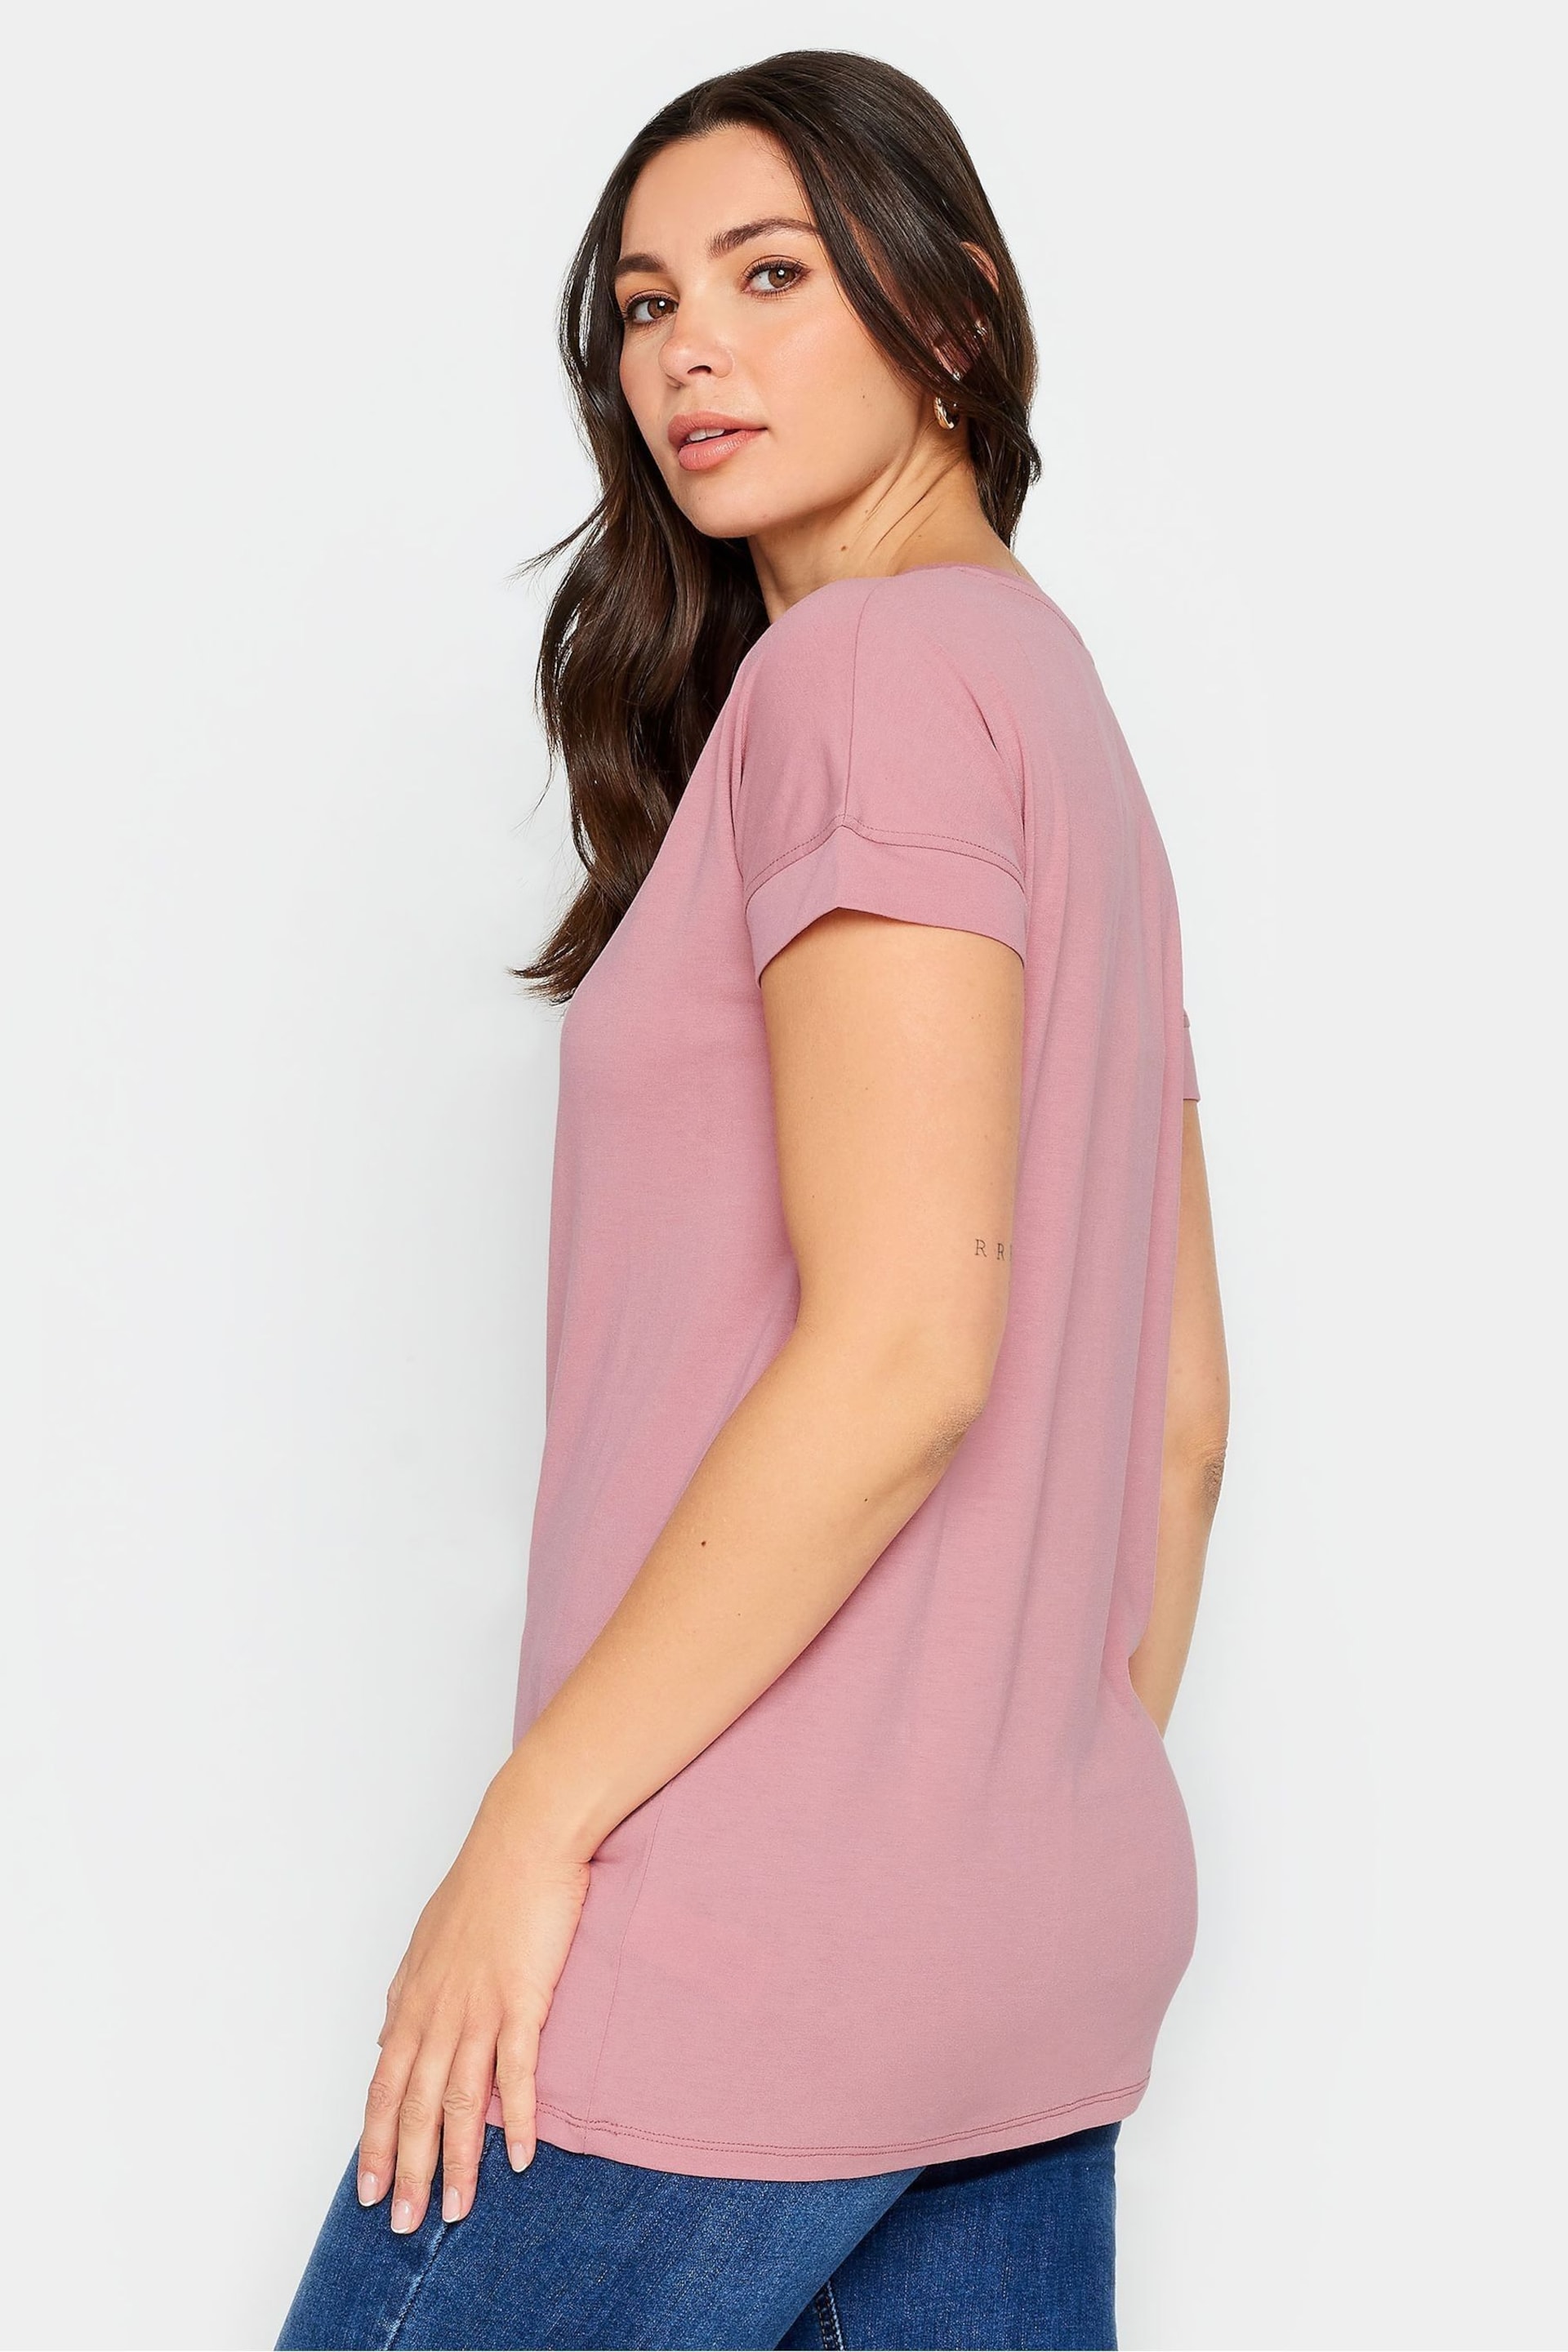 Long Tall Sally Pink PREMIUM V-Neck T-Shirt - Image 2 of 4